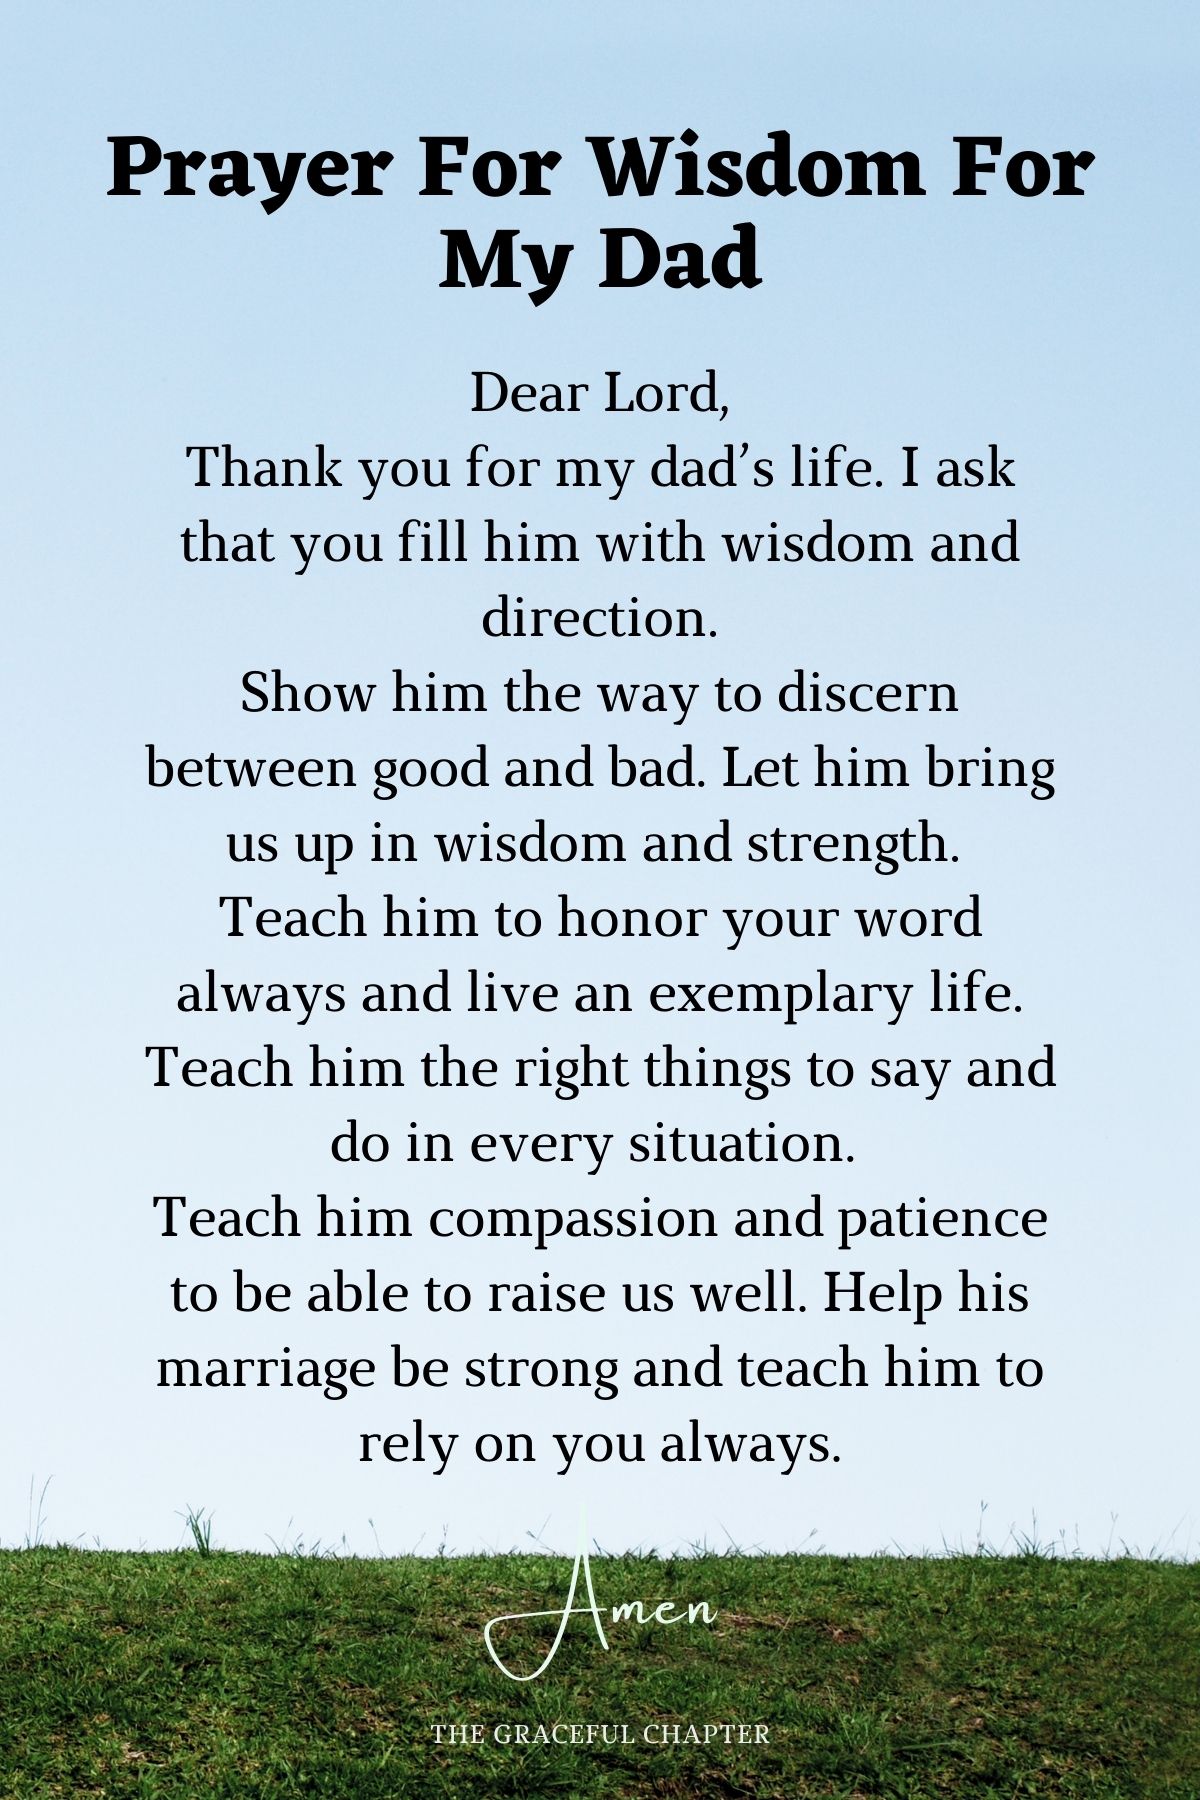 Prayer for wisdom for my dad